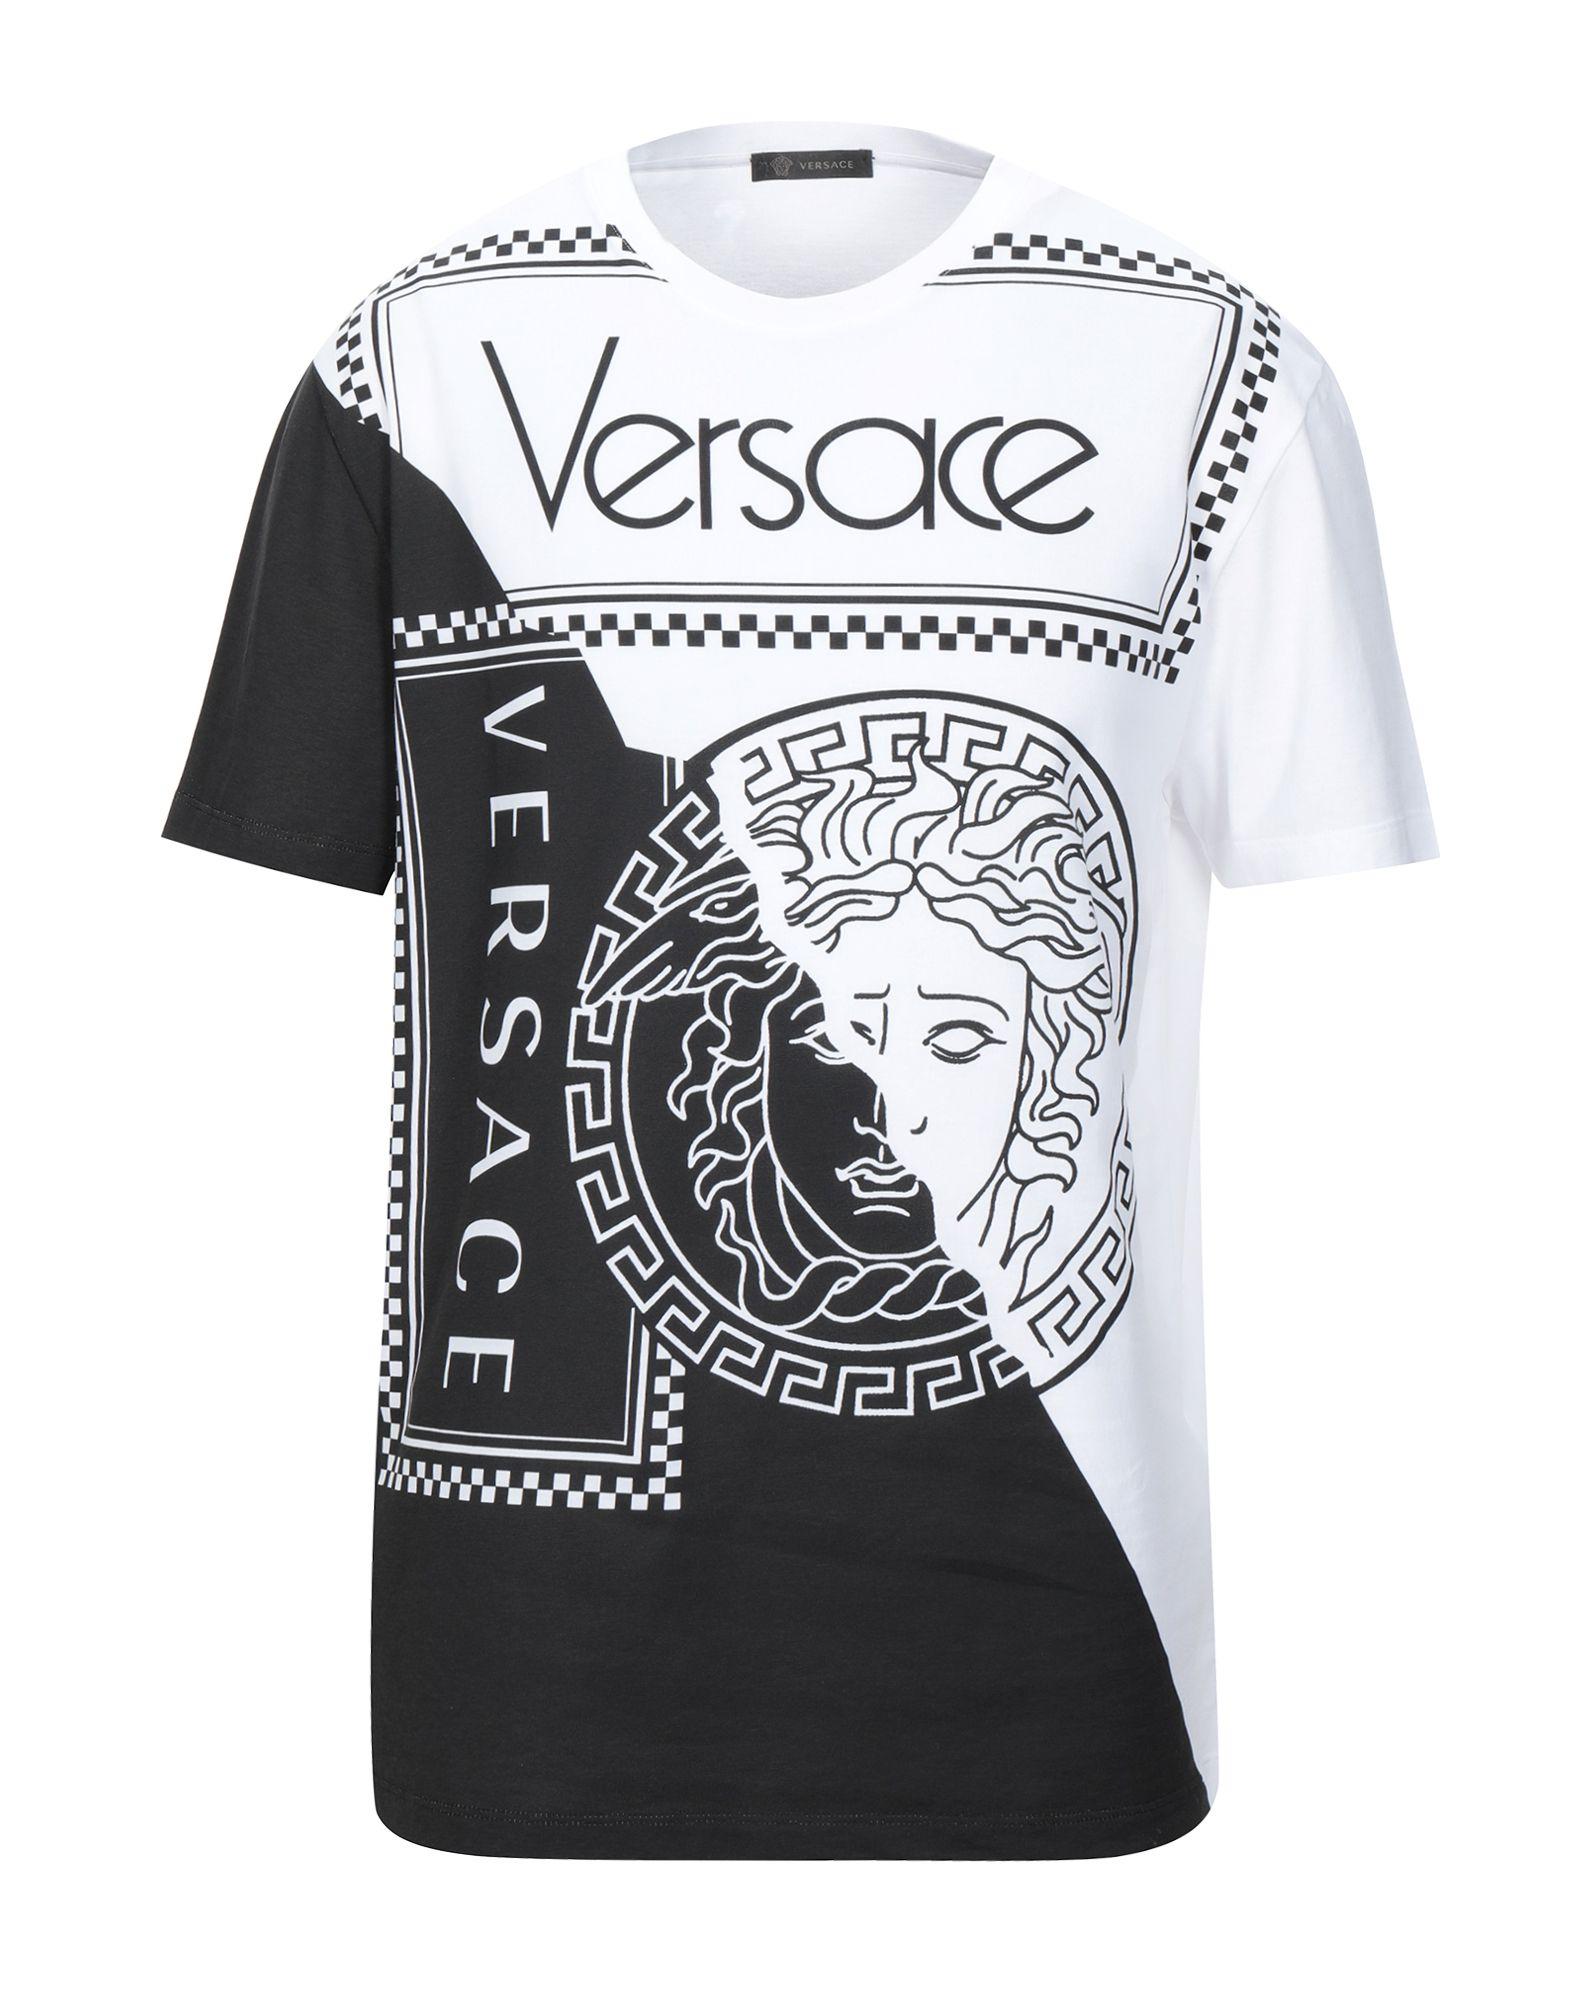 versace shirt black